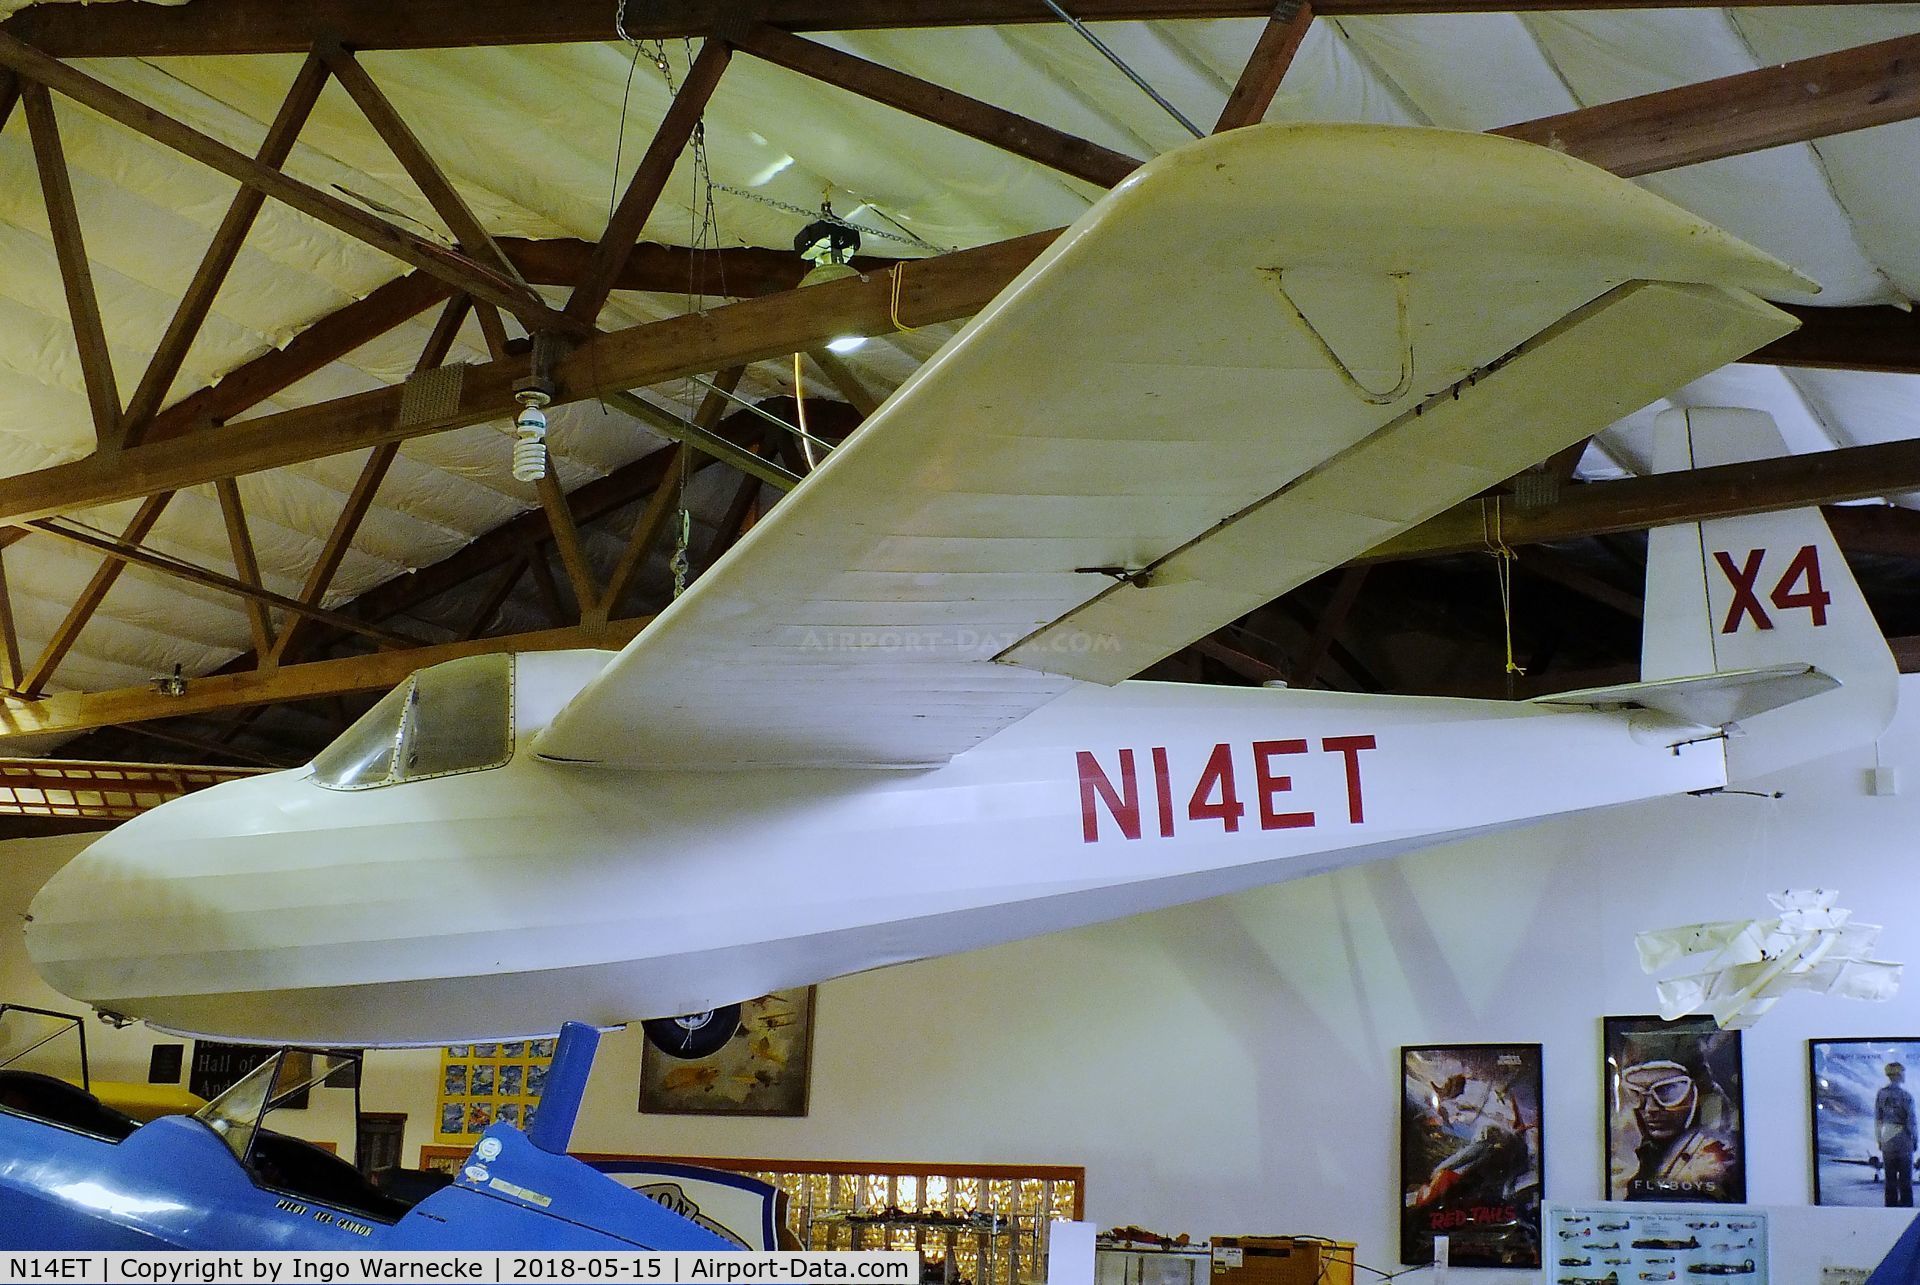 N14ET, 1964 Hall Cherokee II C/N 1 (N14ET), Hall Cherokee II at the Iowa Aviation Museum, Greenfield IA